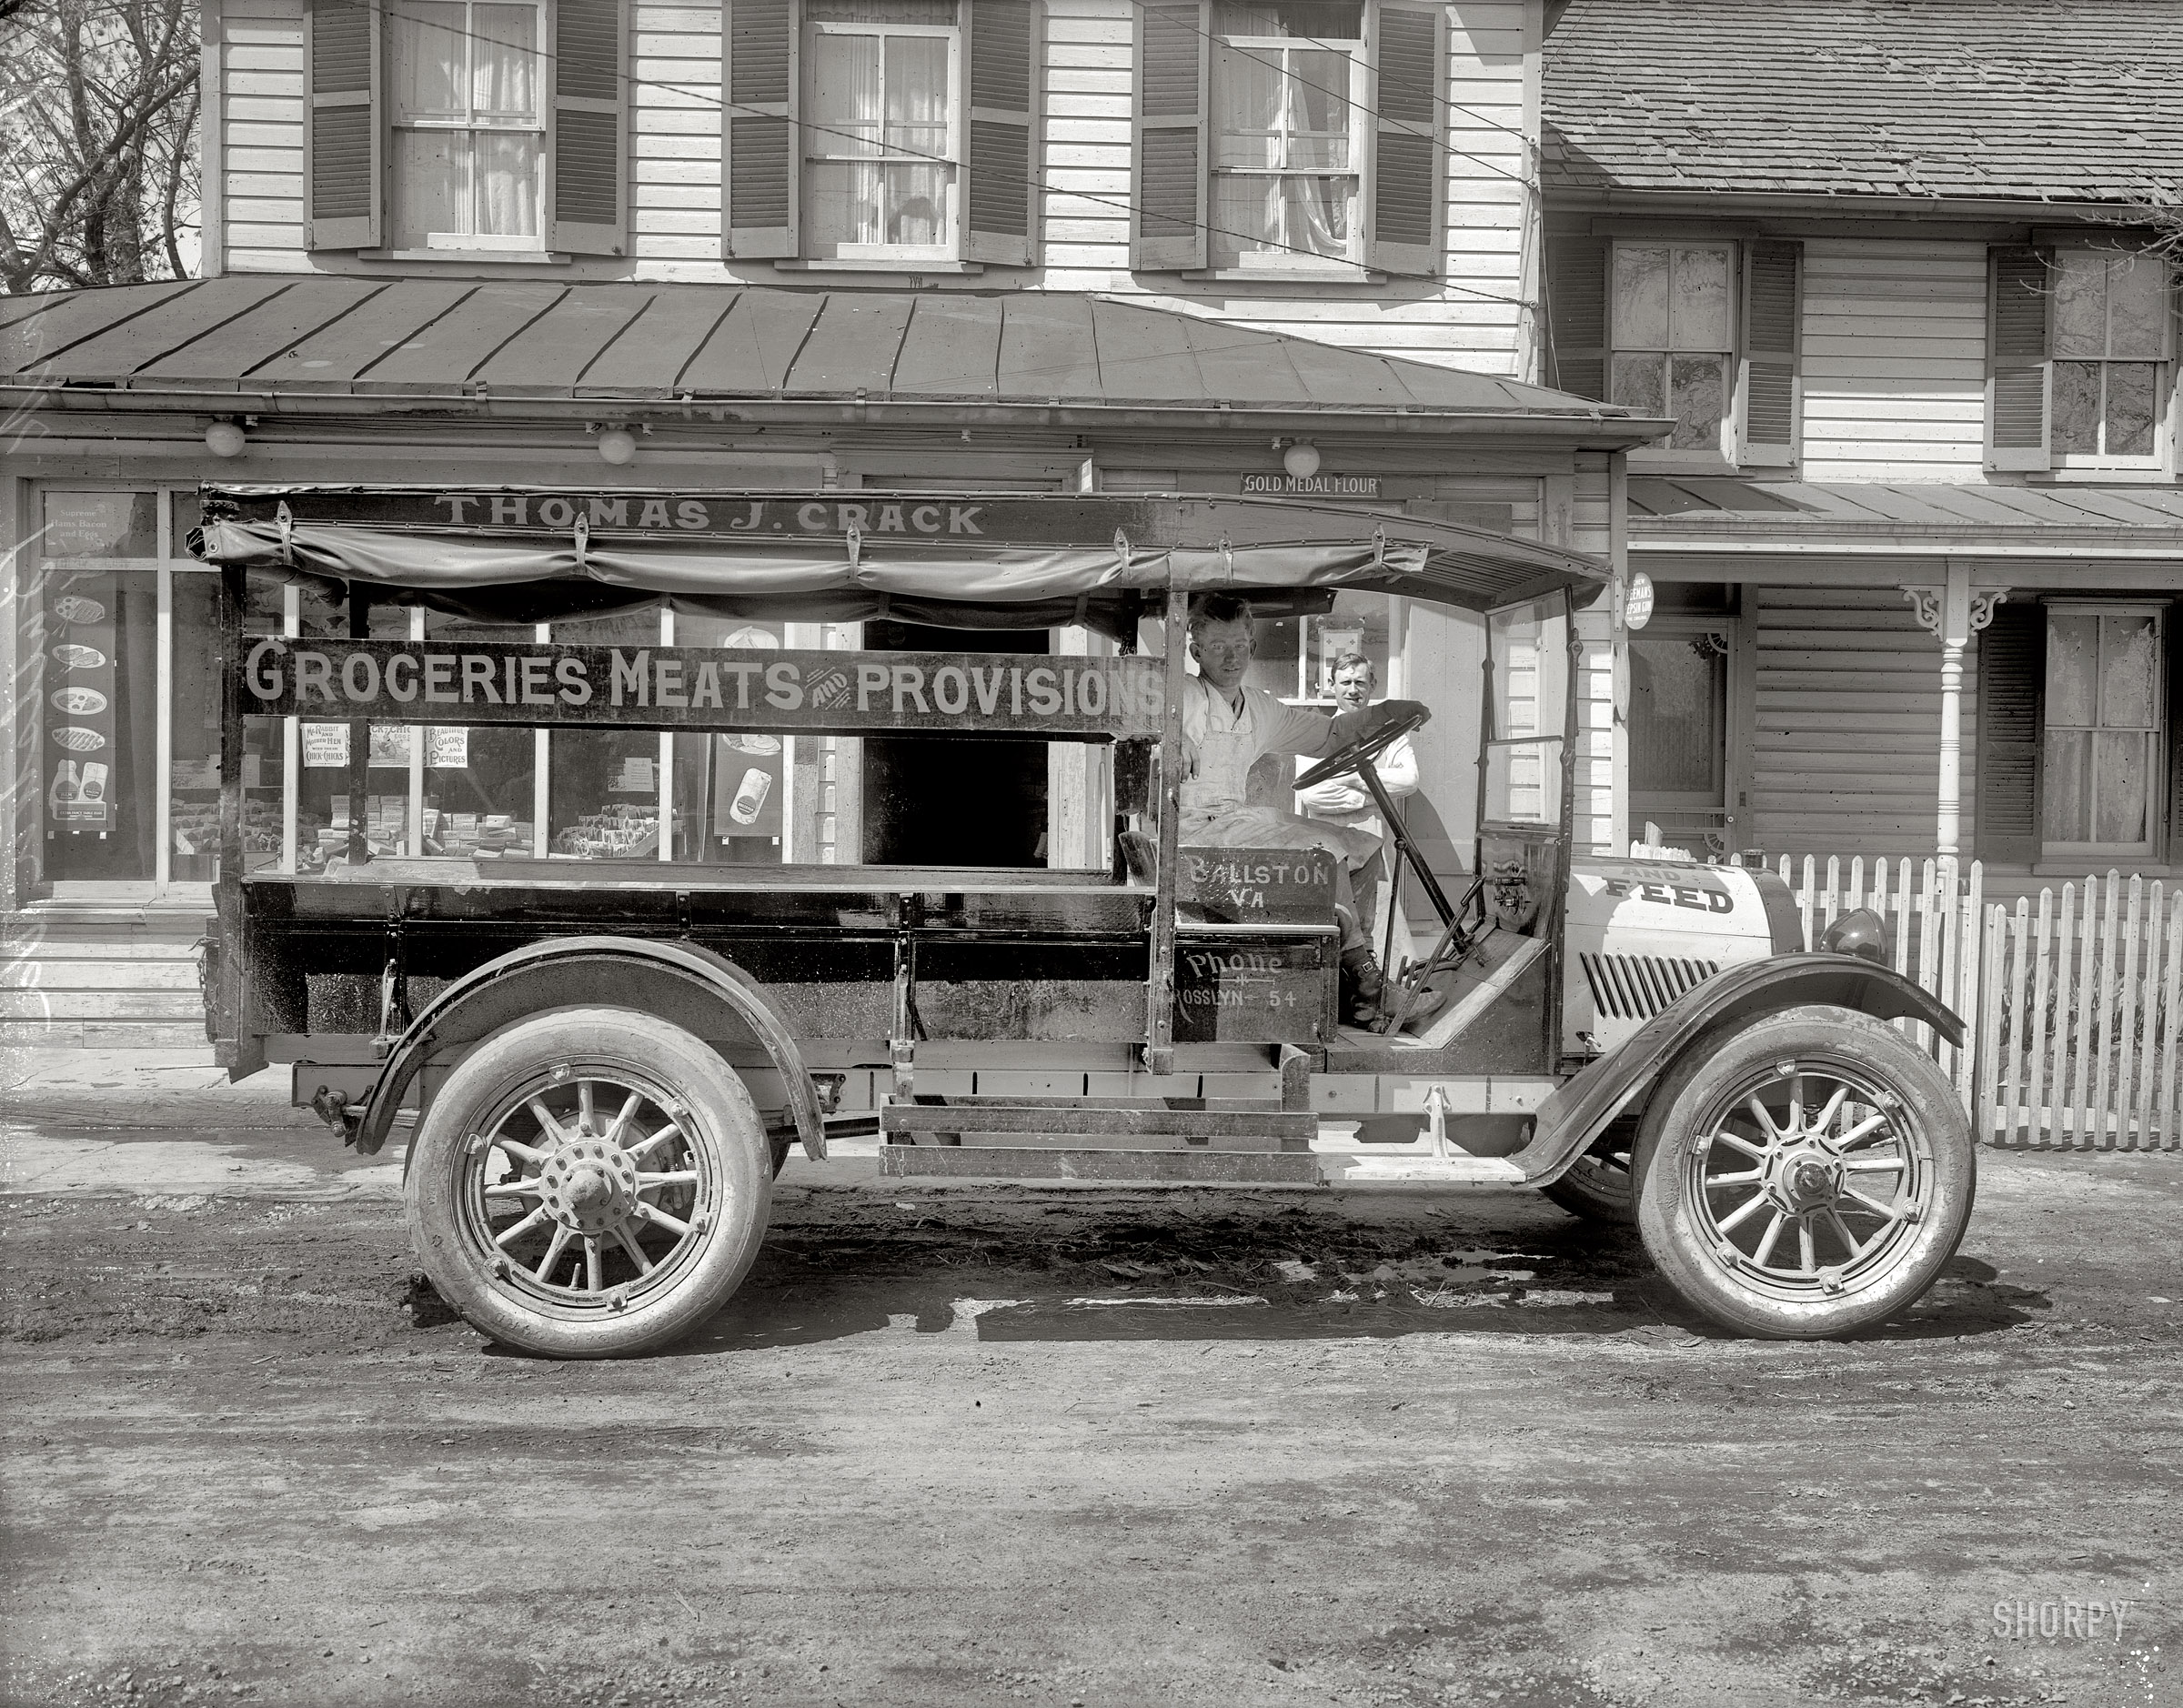 Ballston, Virginia, circa 1921. "Oldsmobile truck, Thomas J. Crack." National Photo Company Collection glass negative. View full size.